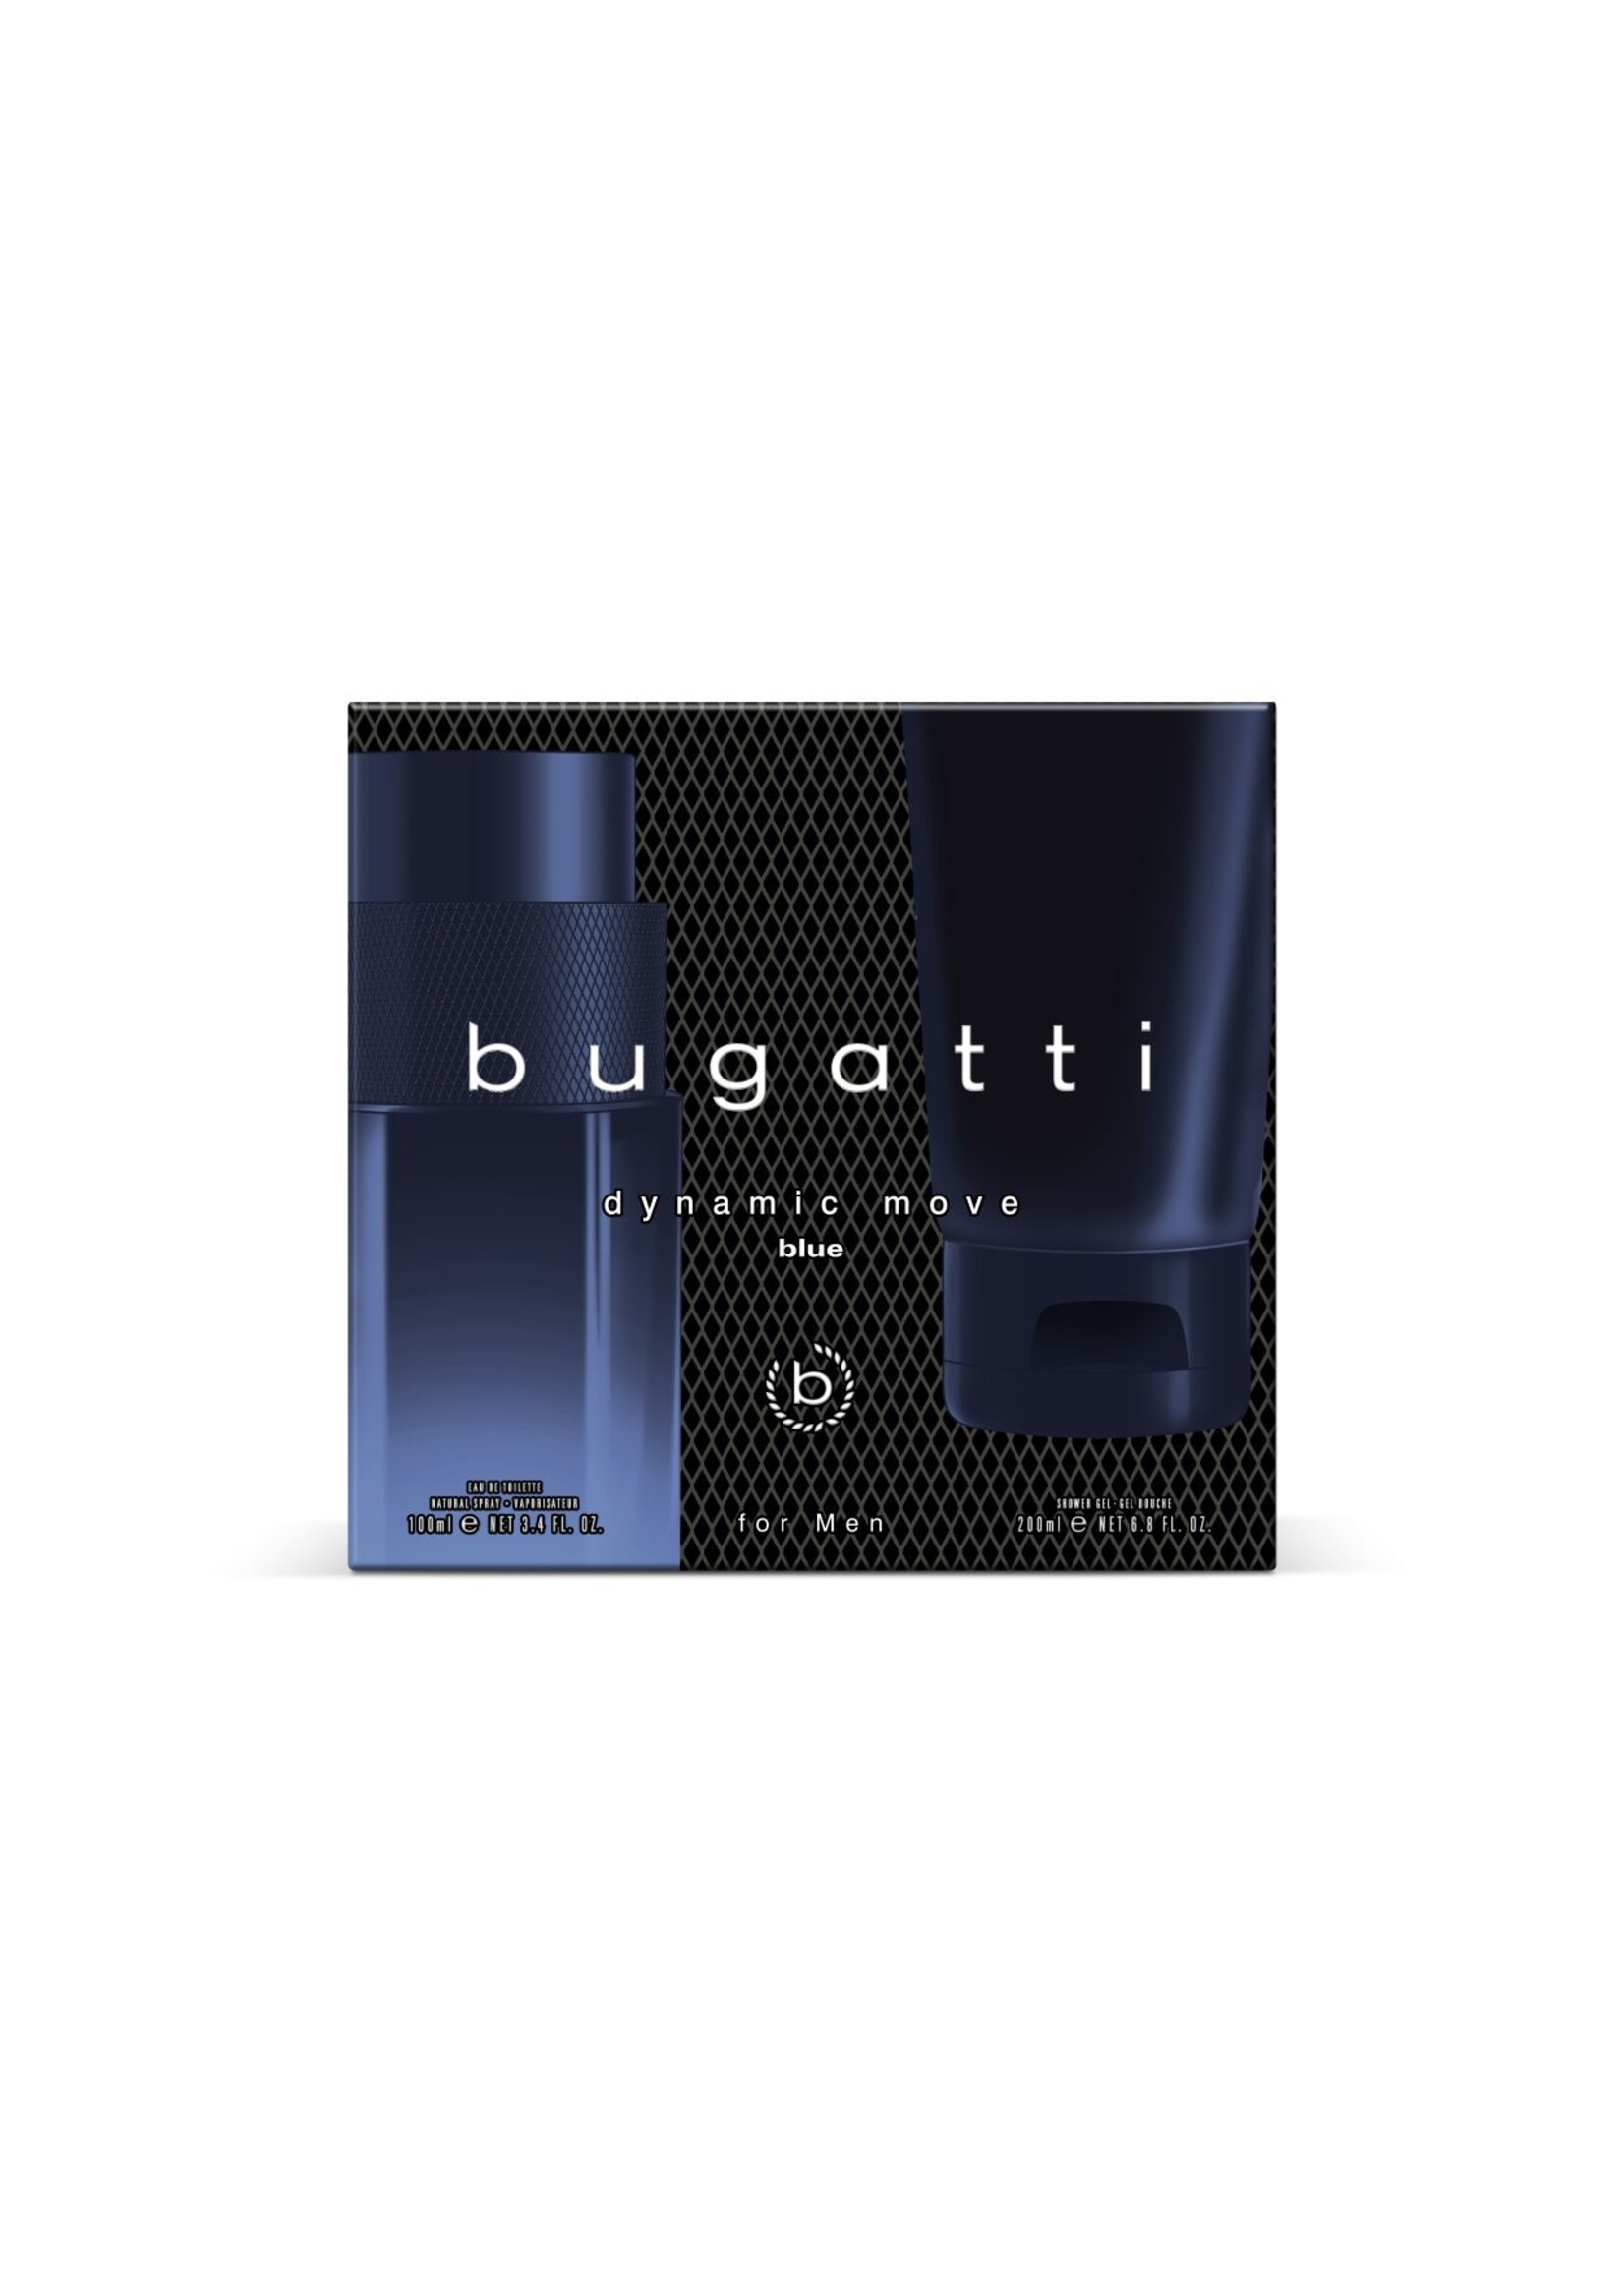 Bugatti Dynamic Move Blue Giftset